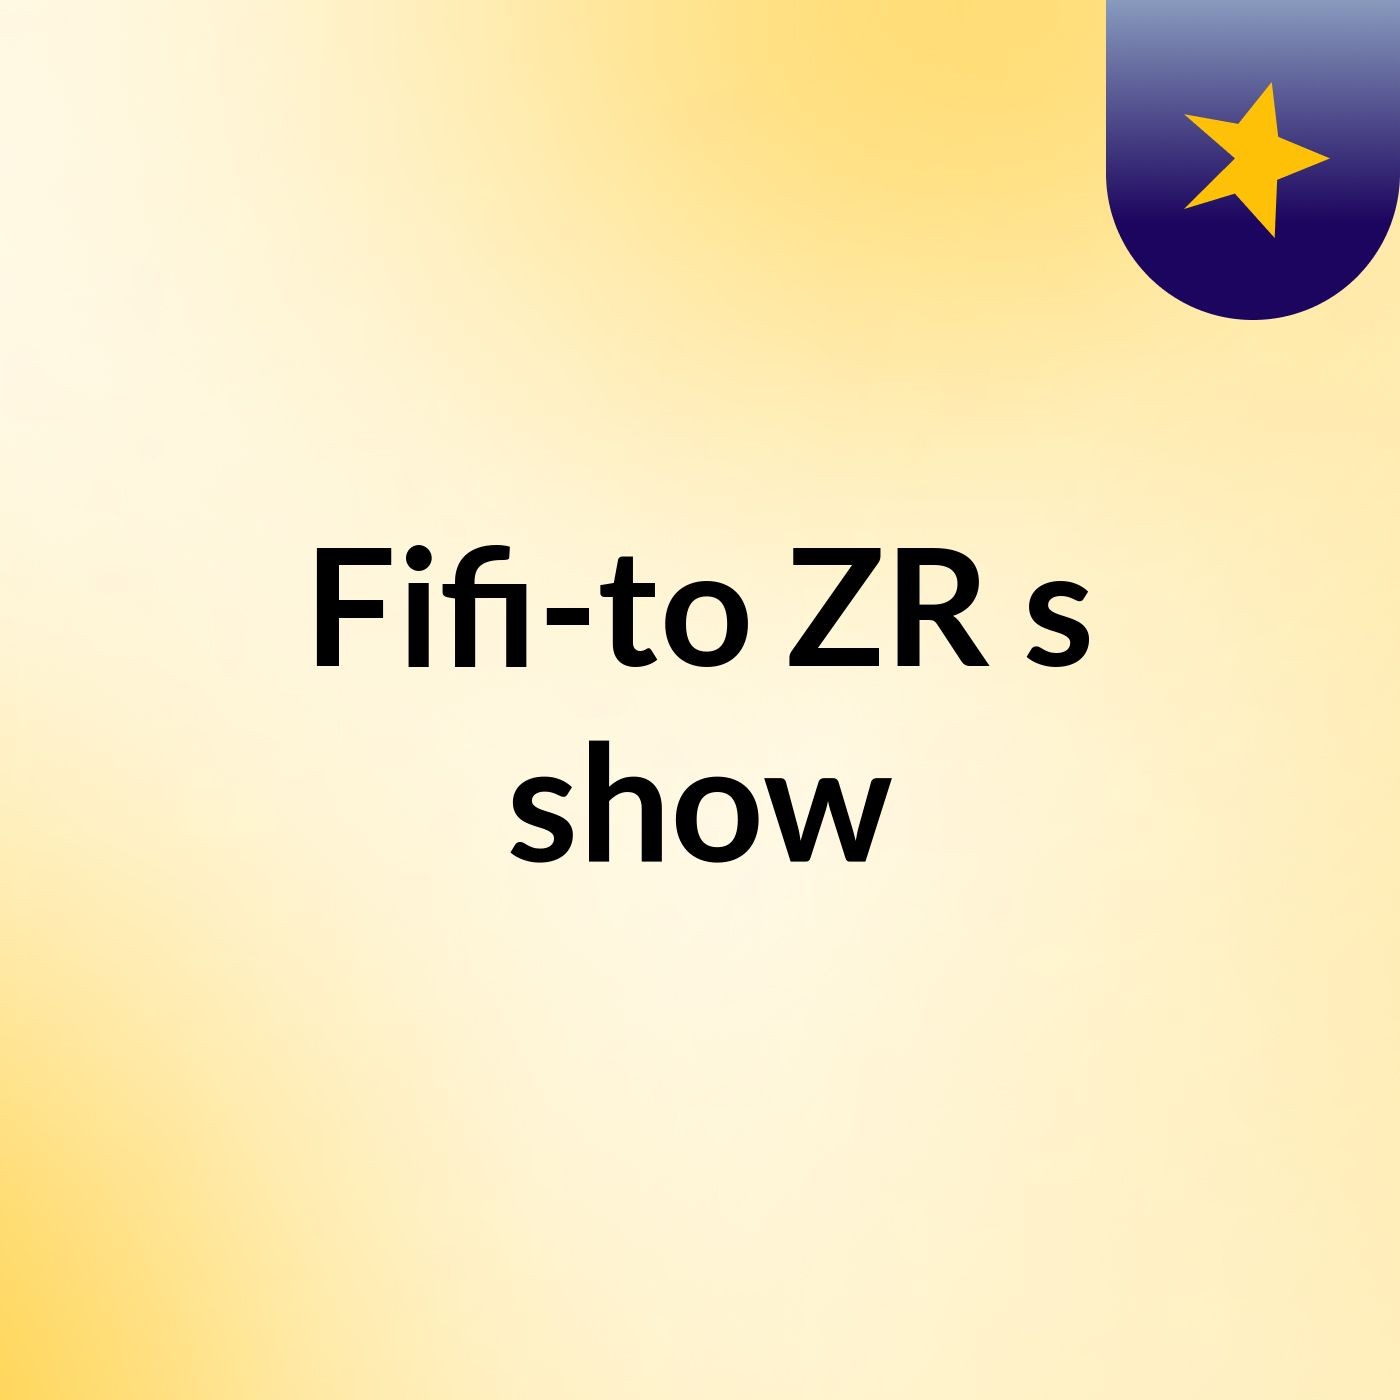 Fifi-to ZR's show